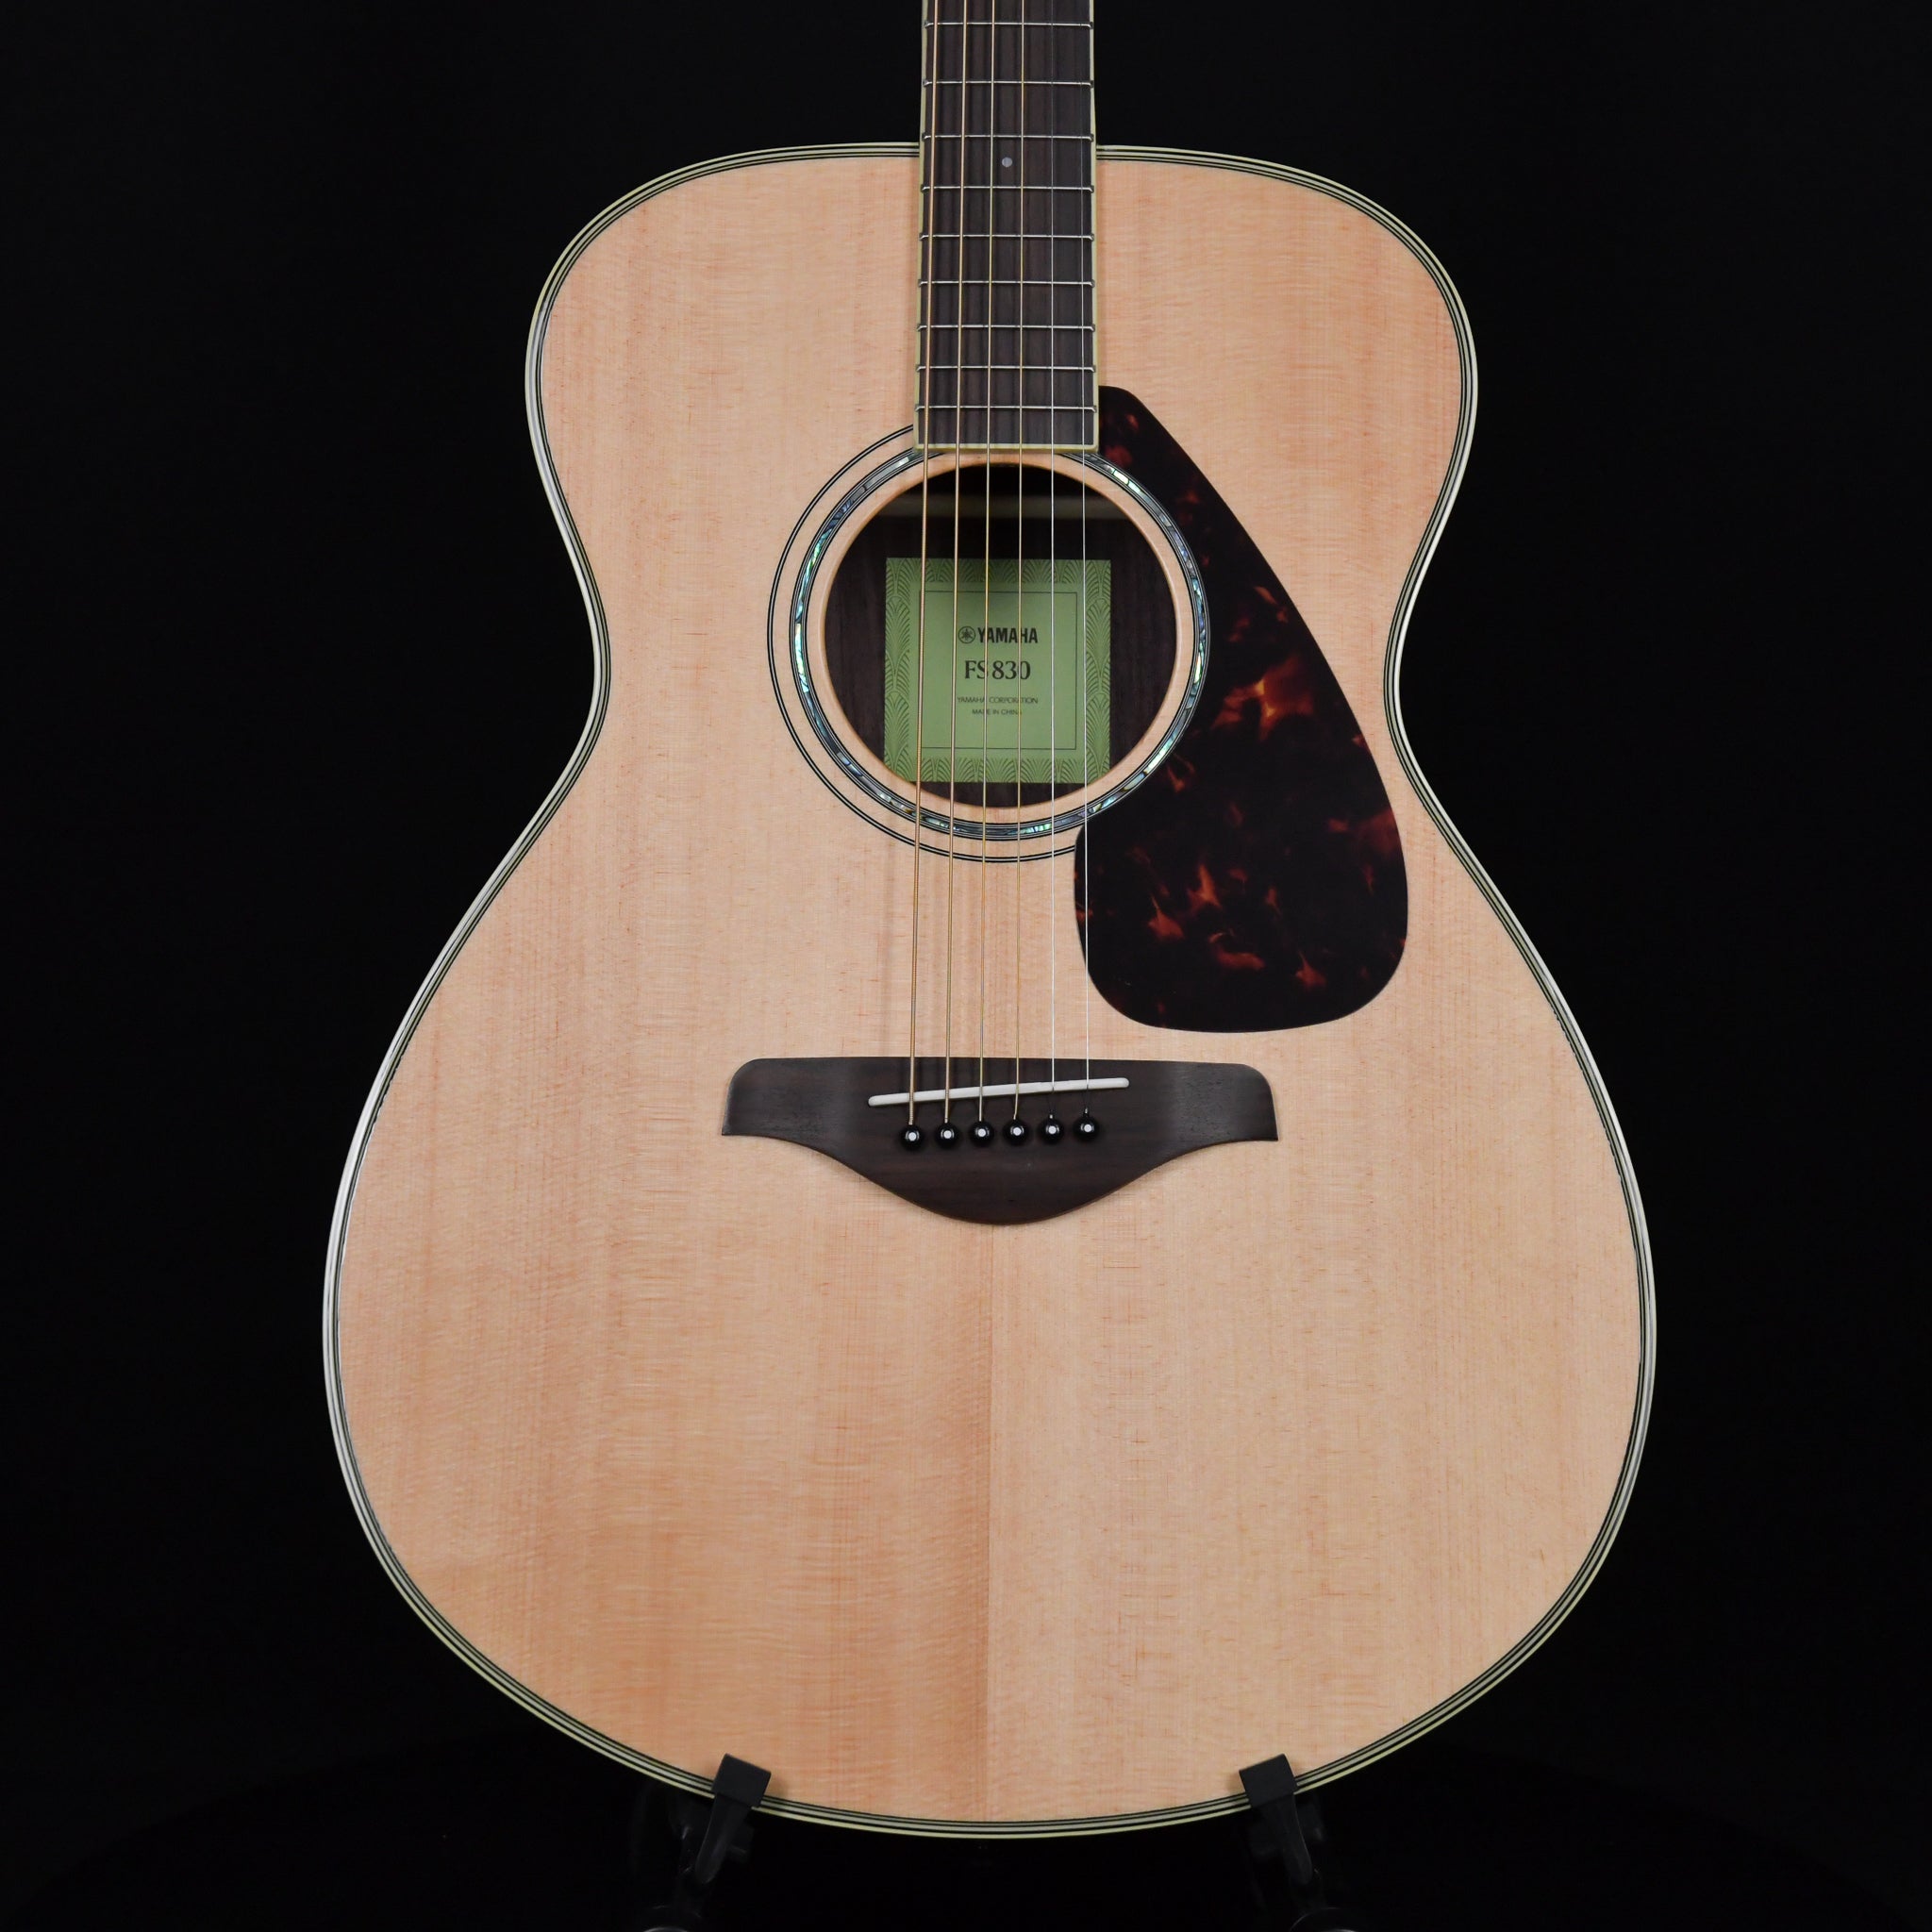 Yamaha FS830 Spruce Top Rosewood Fingerboard Concert Guitar